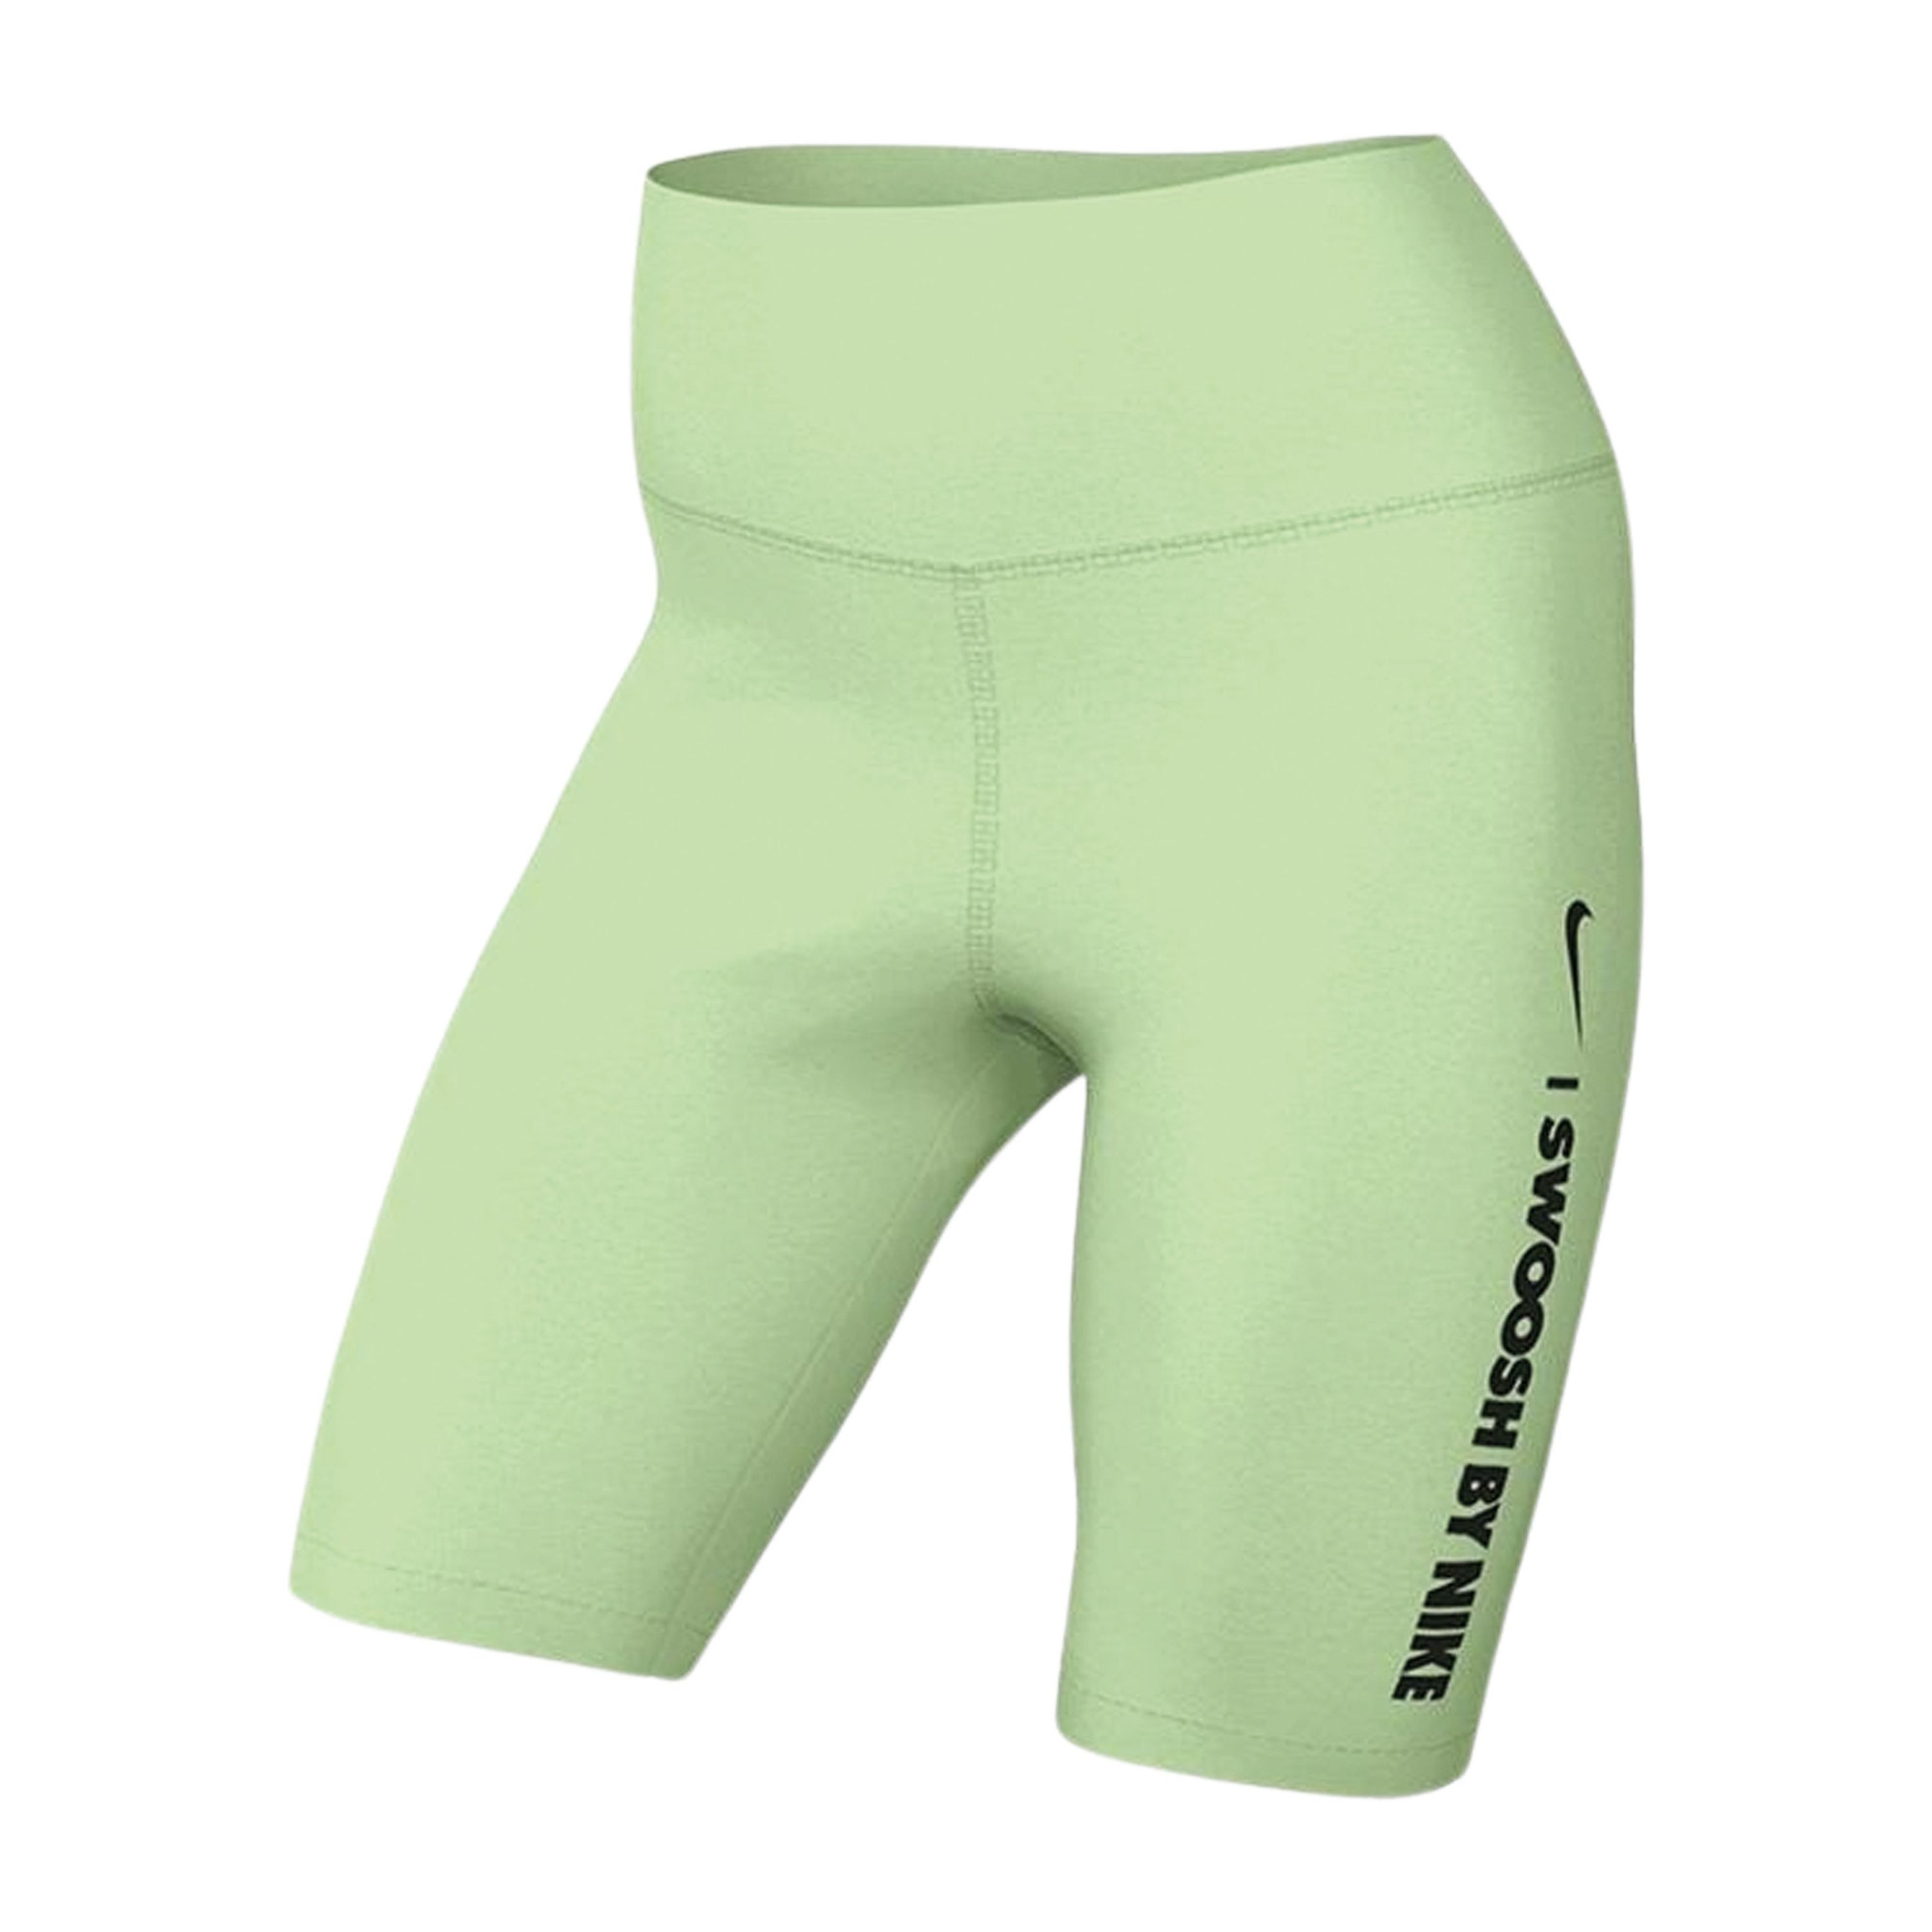 Nike One bikeshorts met hoge taille voor dames (18 cm) Groen